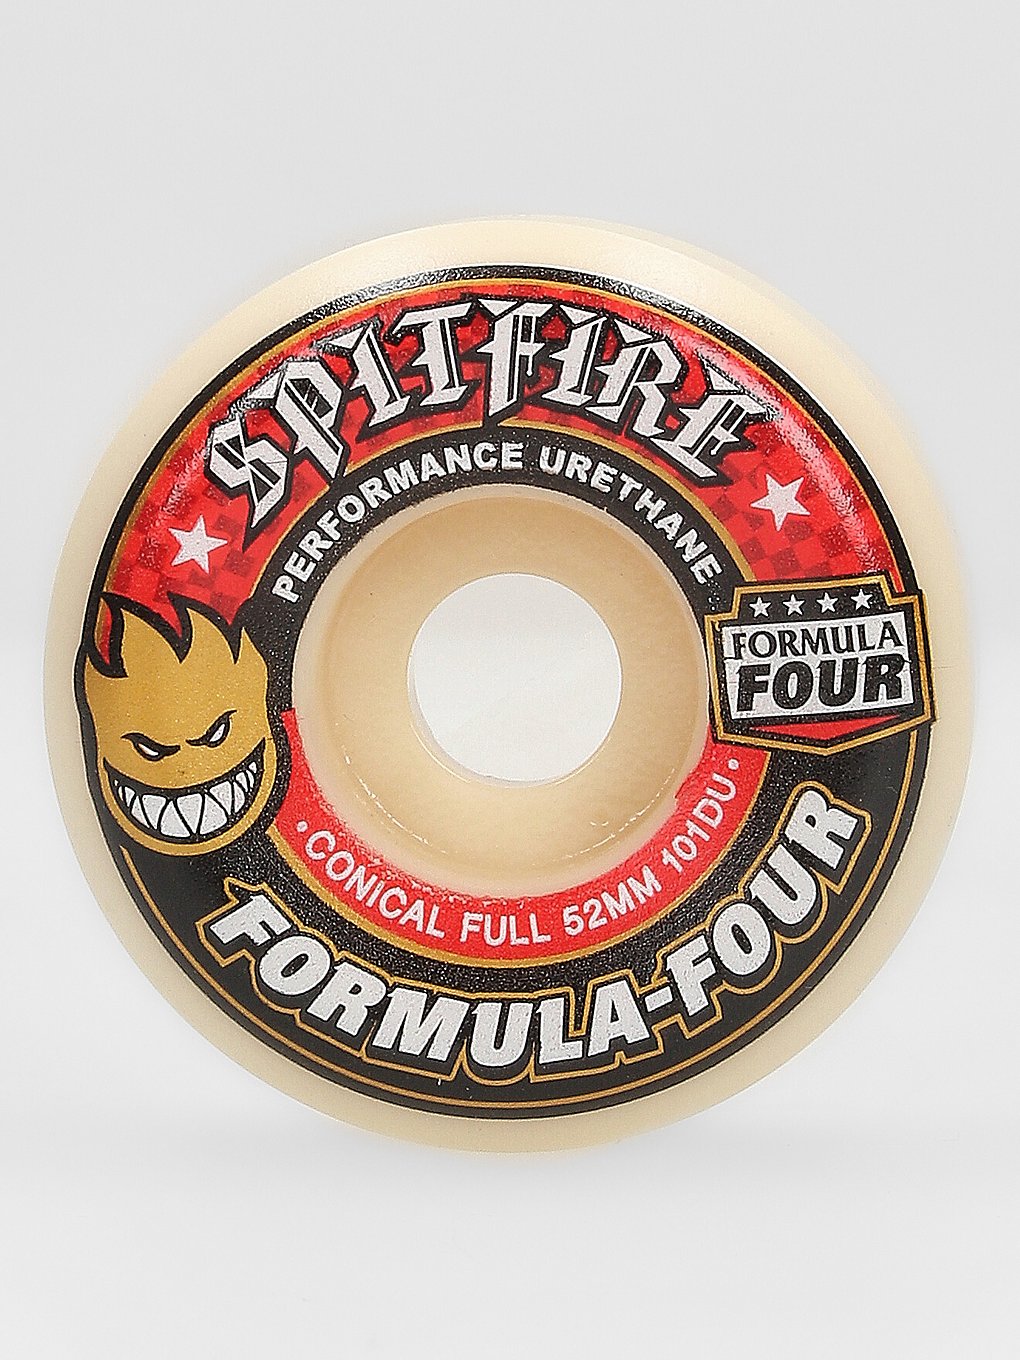 Spitfire Formula 4 101D Conical Full 52mm Wheels red print